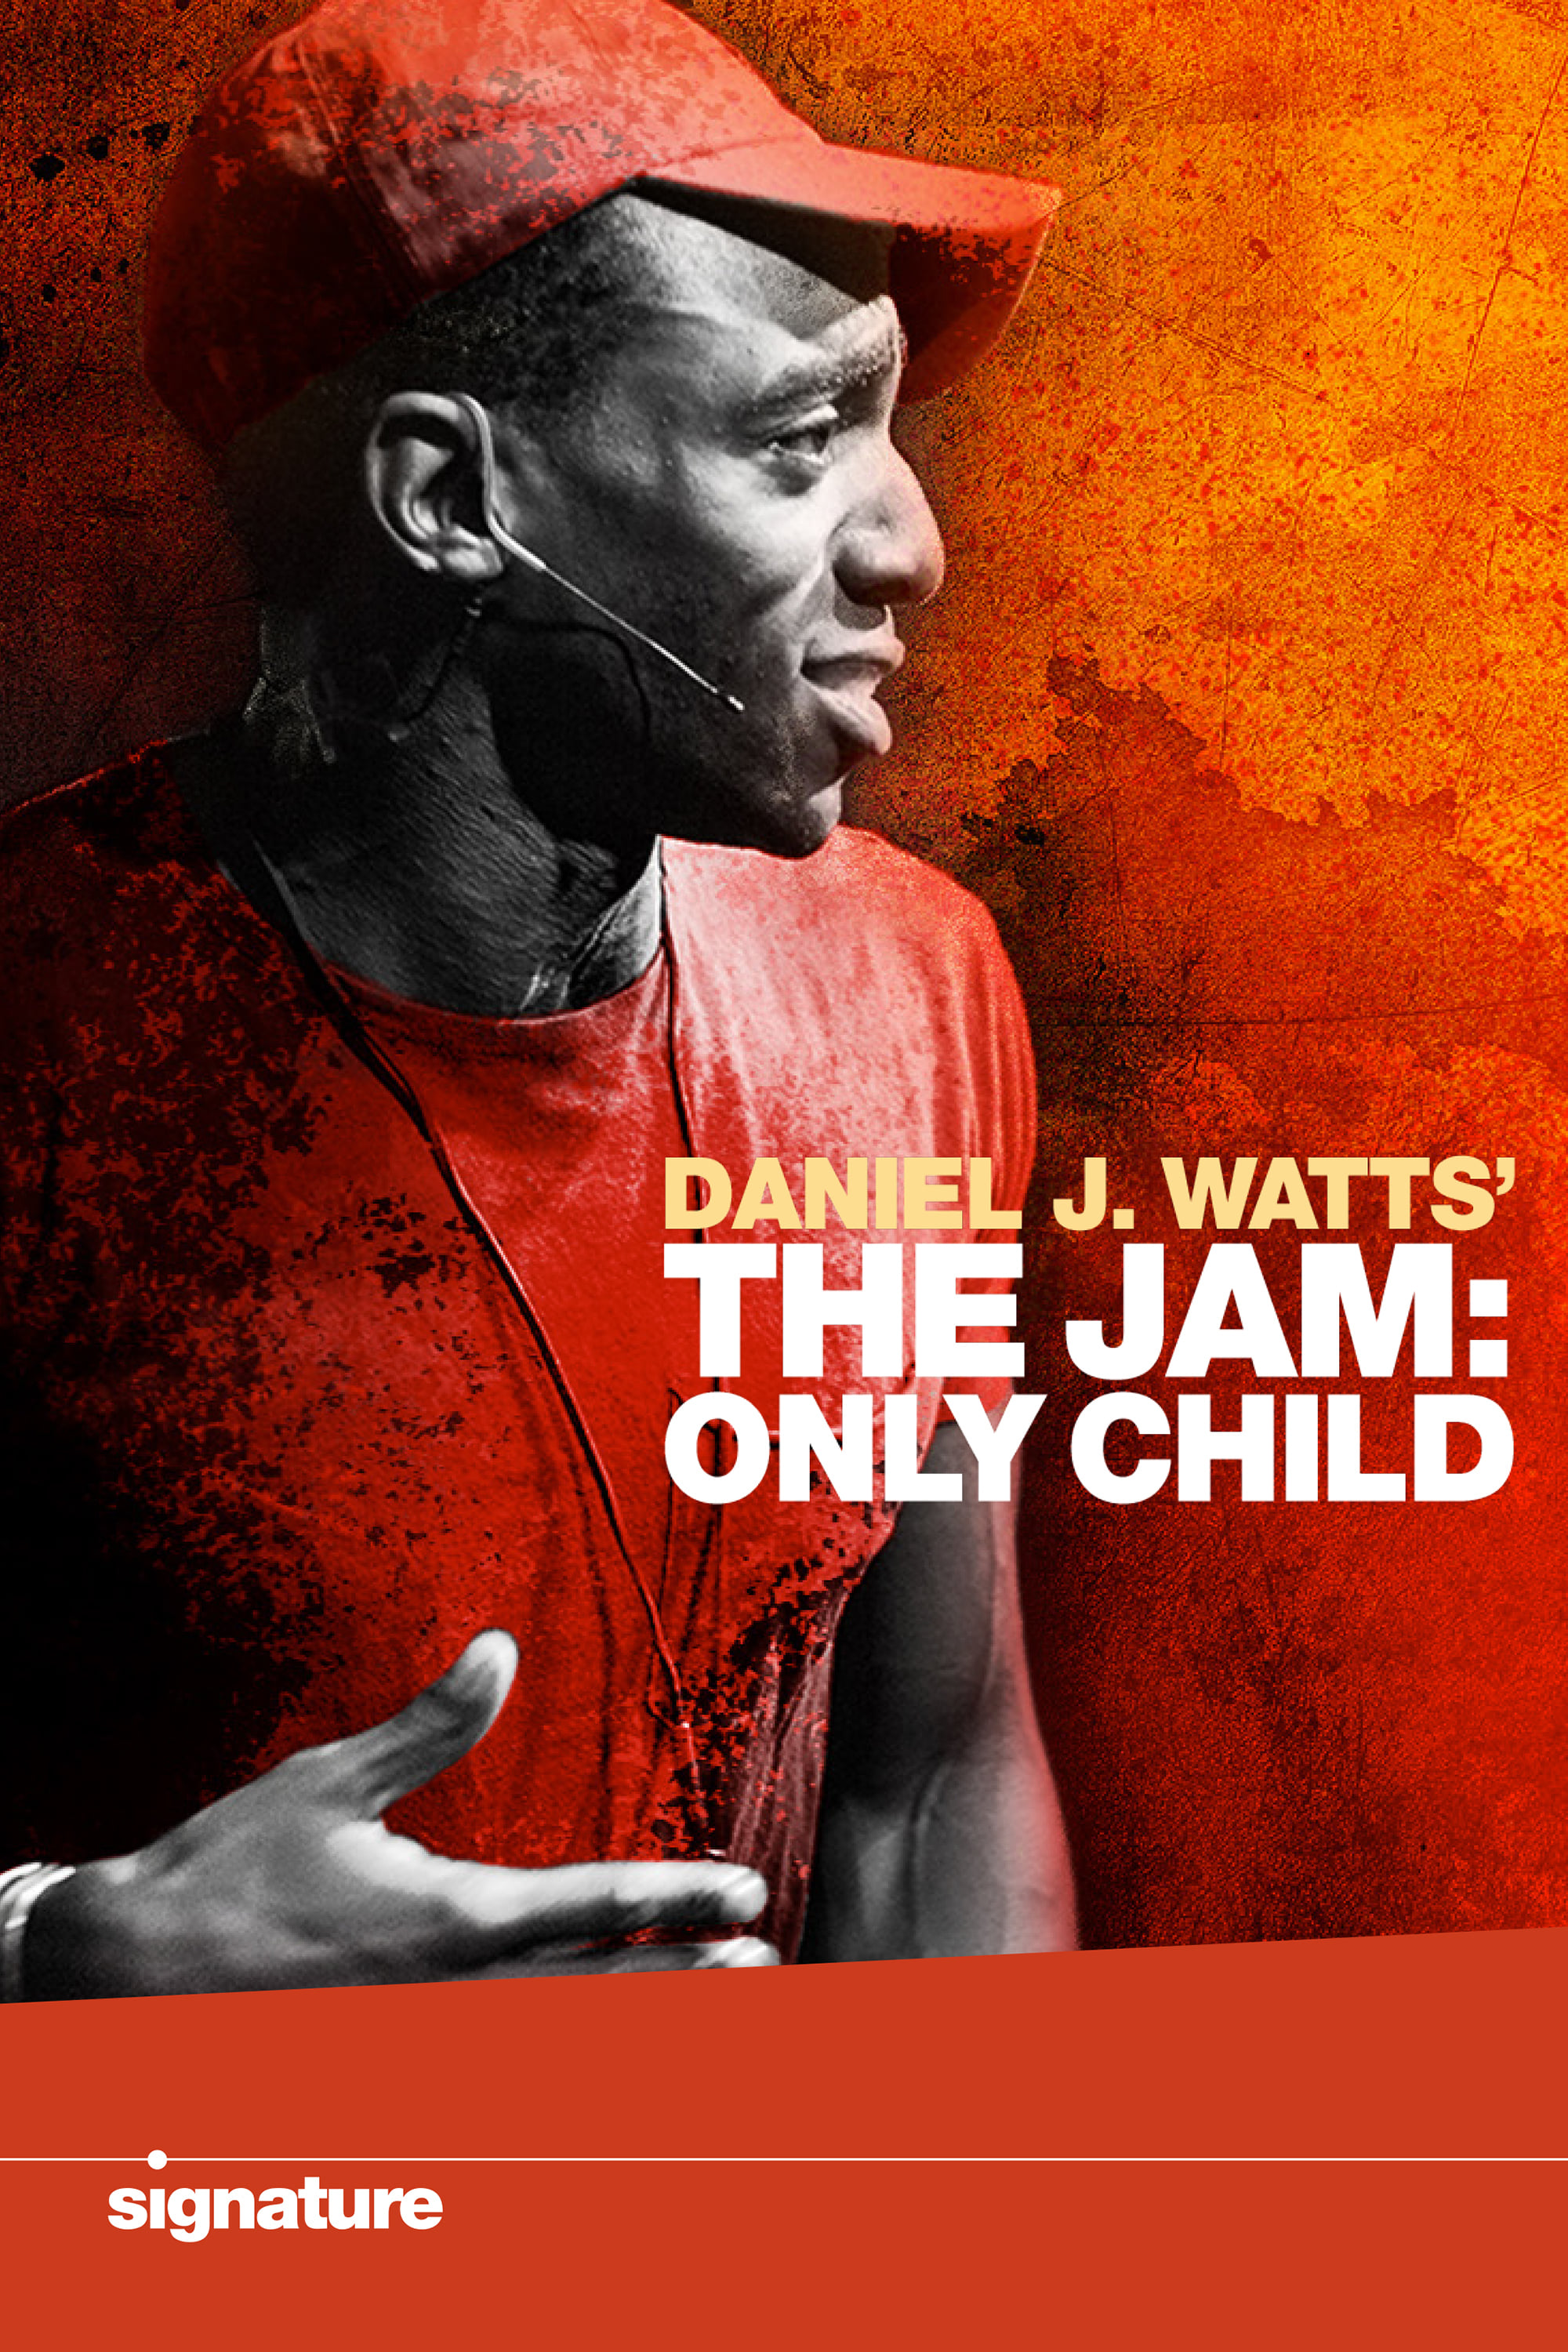 Daniel J. Watts' The Jam: Only Child